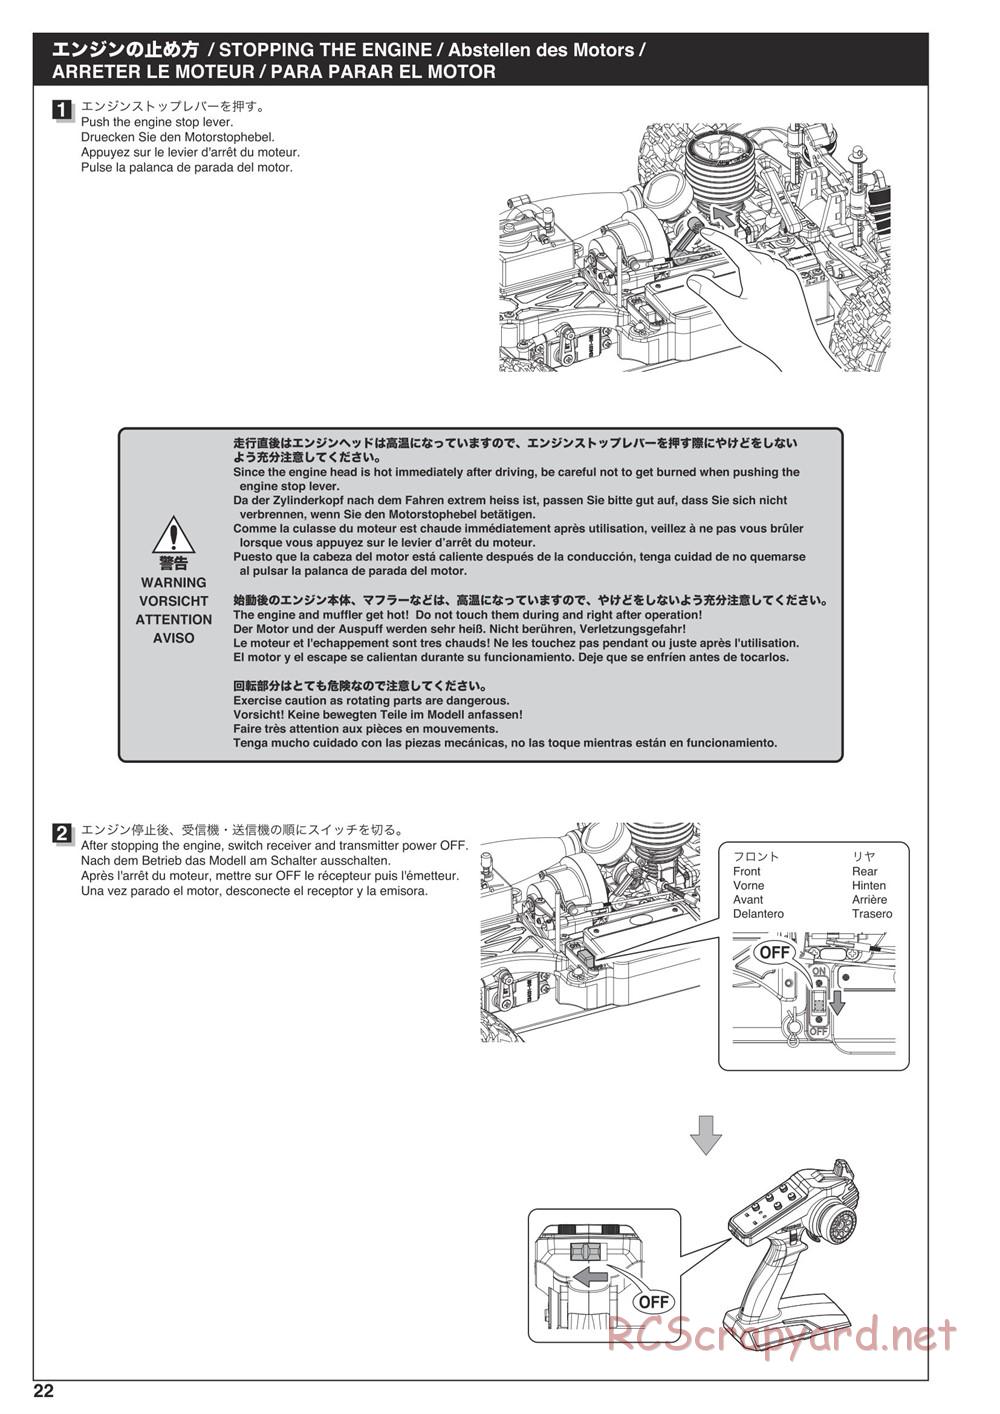 Kyosho - Nitro Tracker (2019) - Manual - Page 22